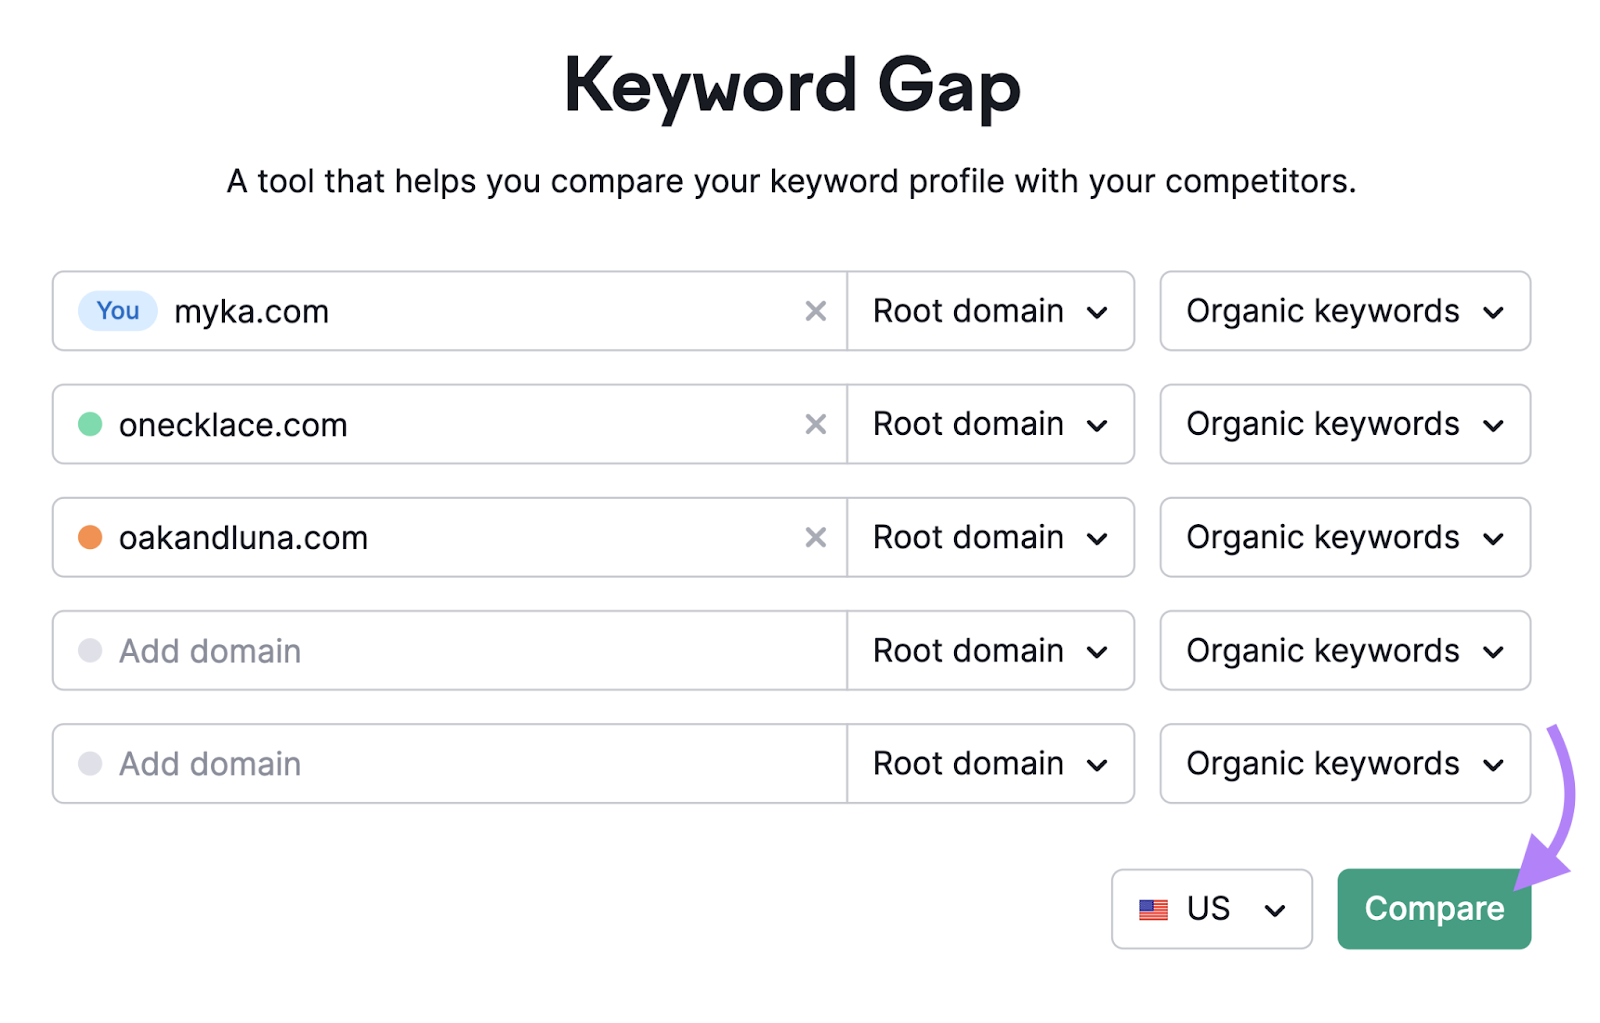 A Keyword Gap search for organic keywords on myka.com, onecklace.com, and oakandluna.com